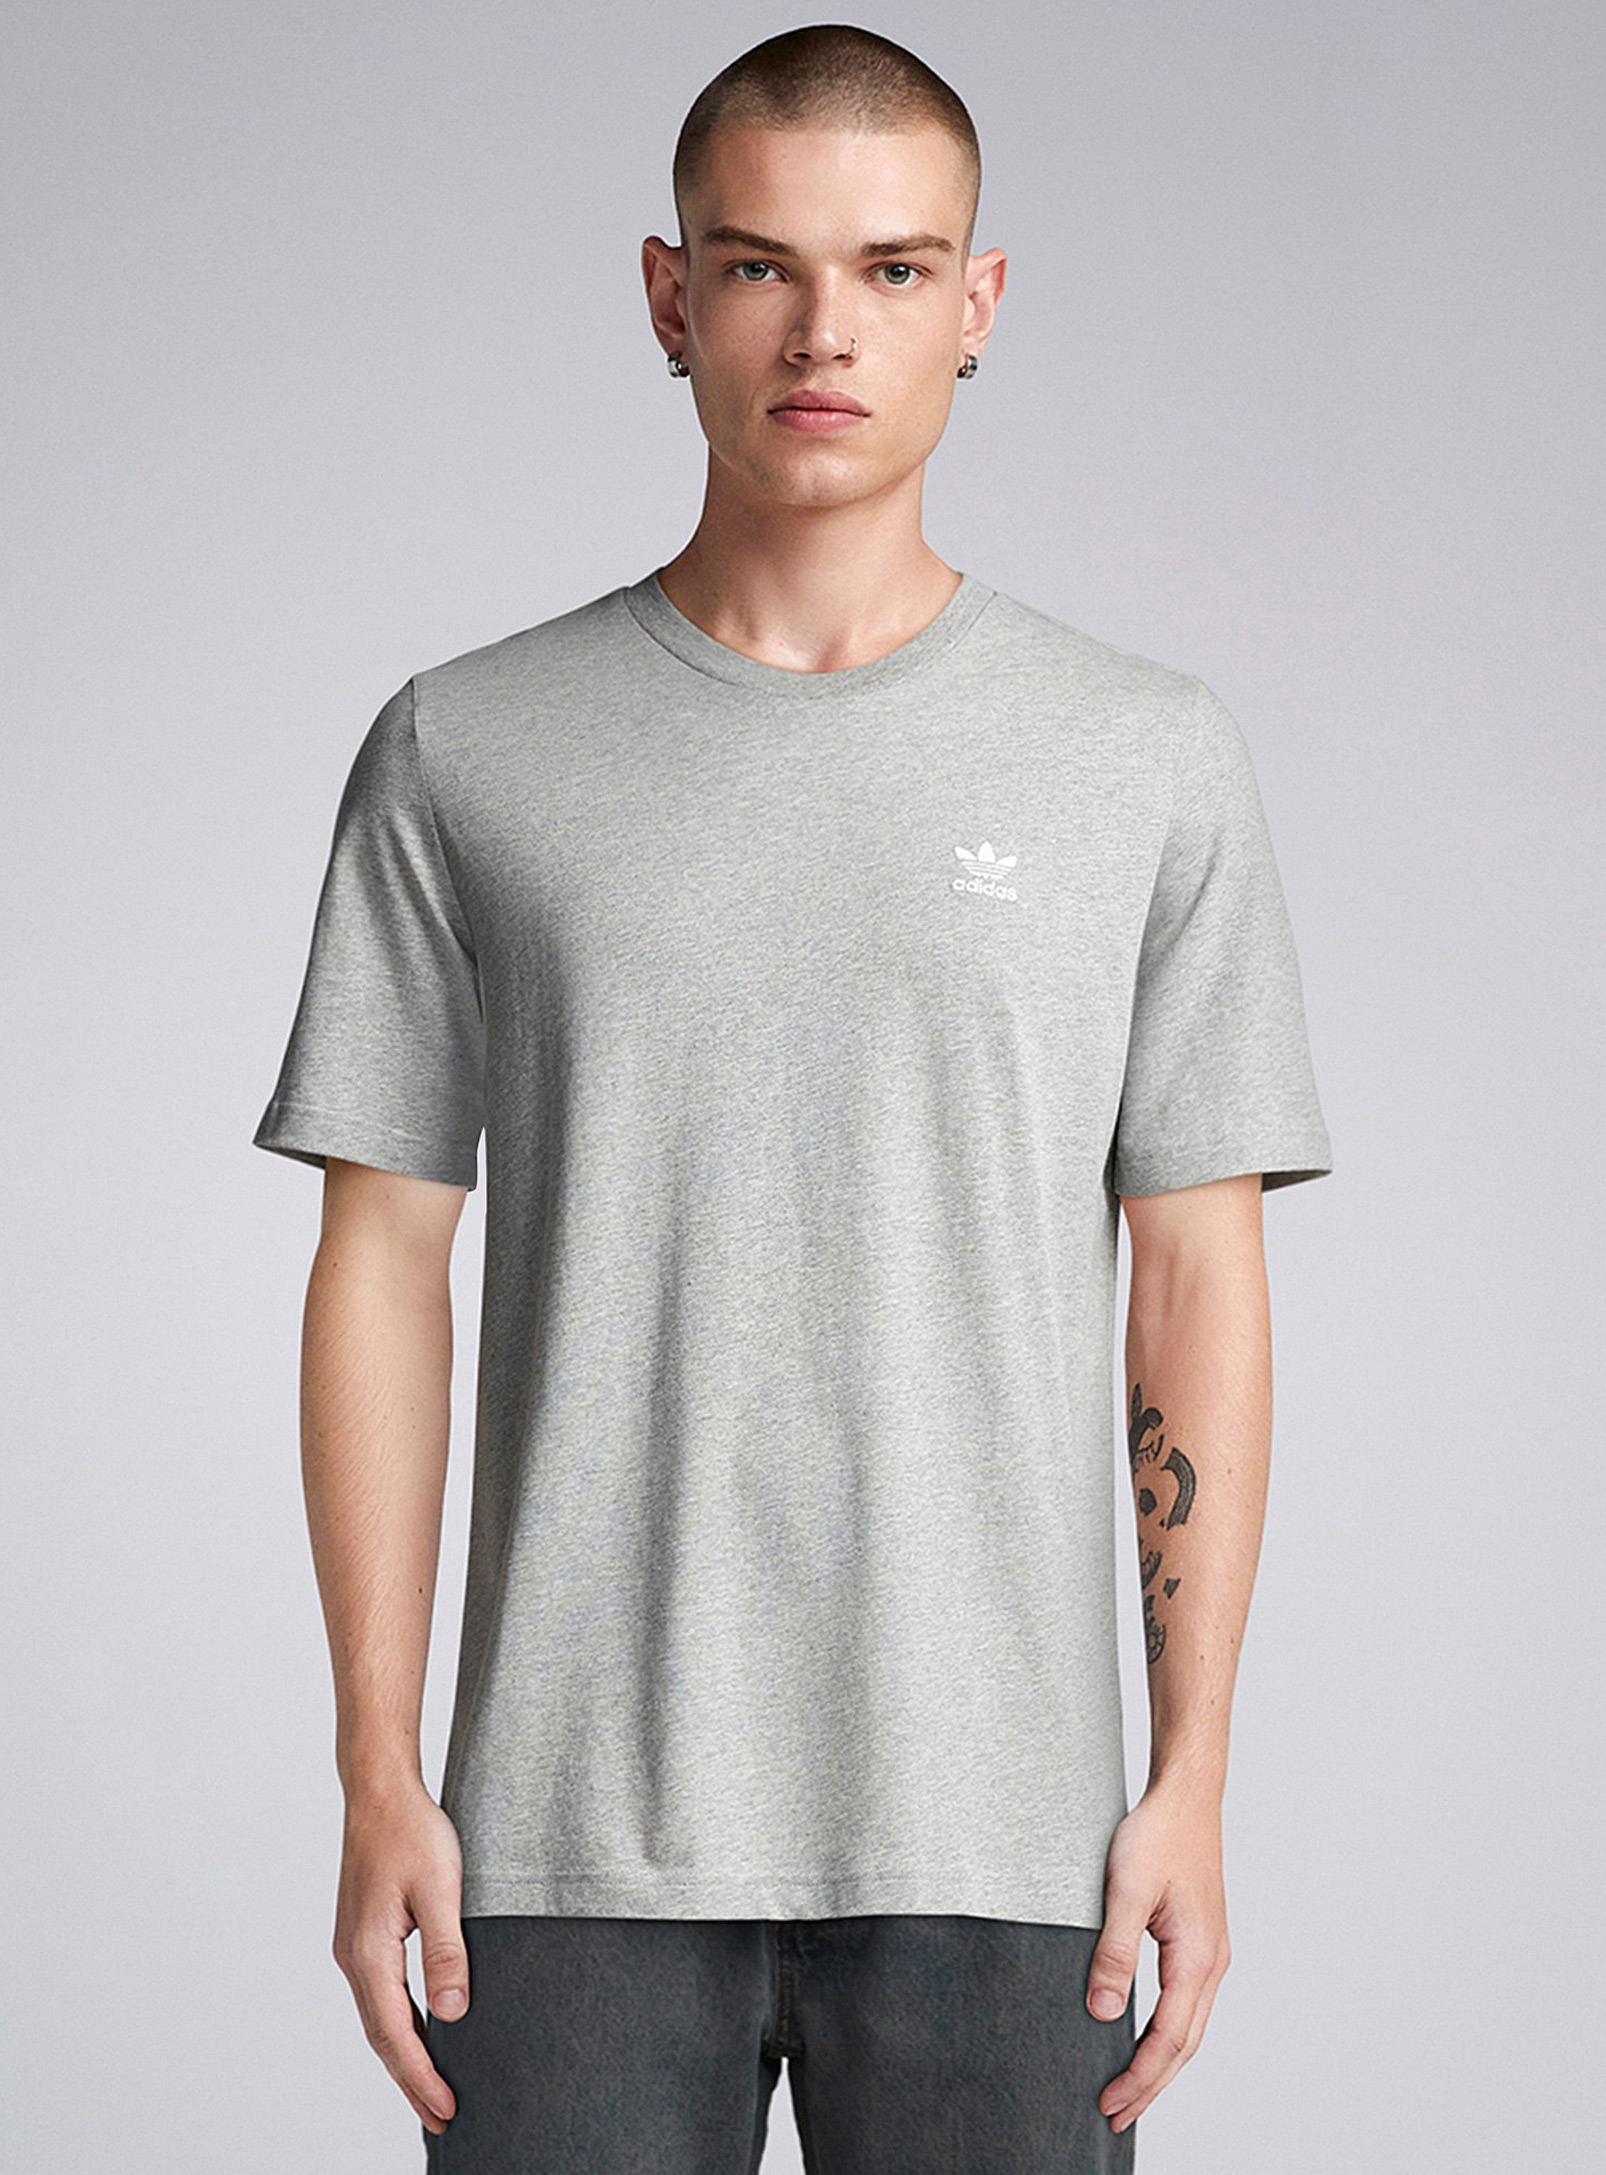 Adidas - Le t-shirt logo Trefoil